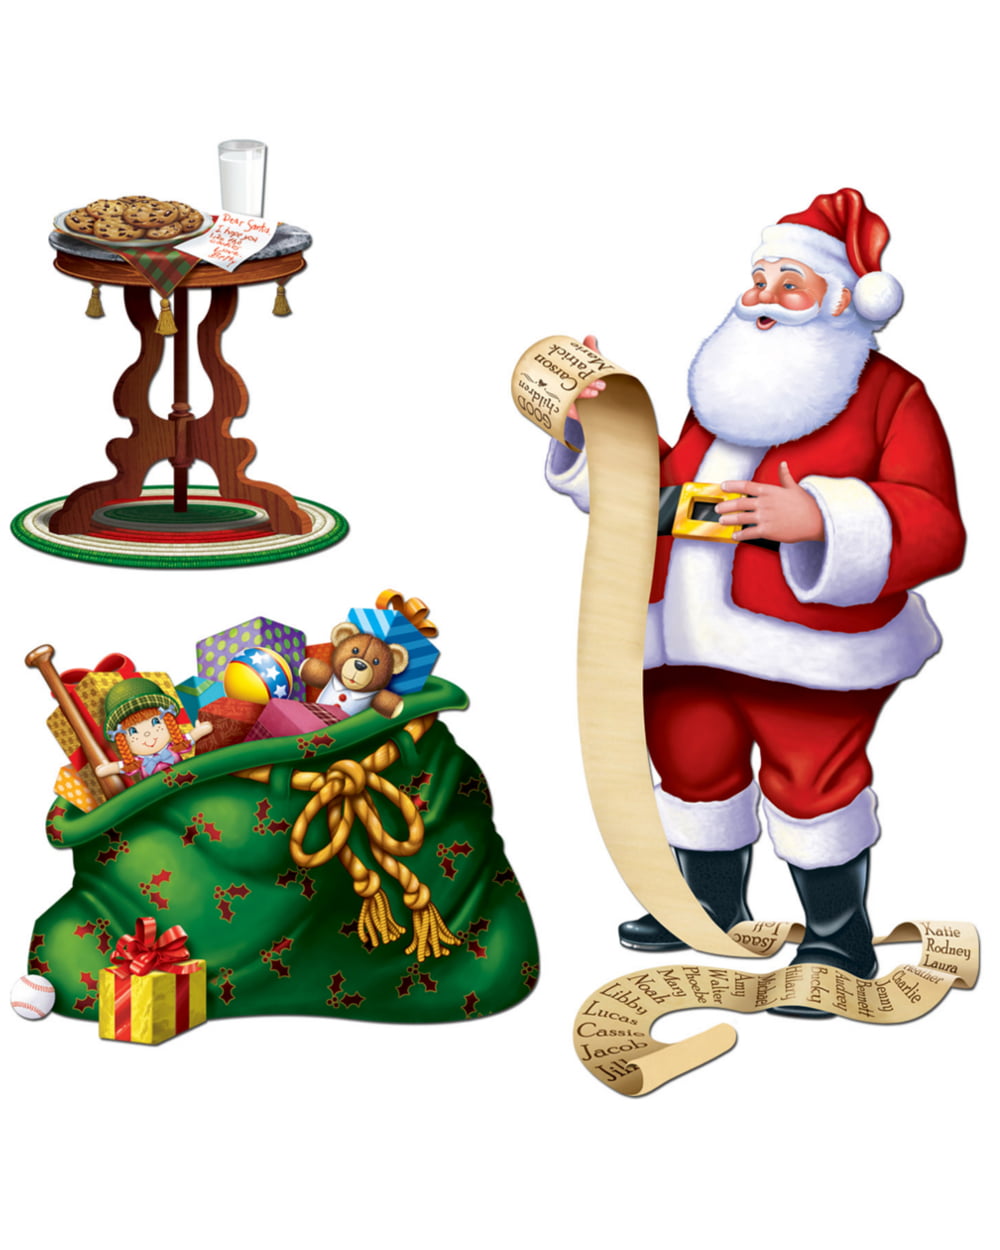 Giant Santa Toy Christmas Party Scene Setter Add-on Prop Santa's Decoration 5ft